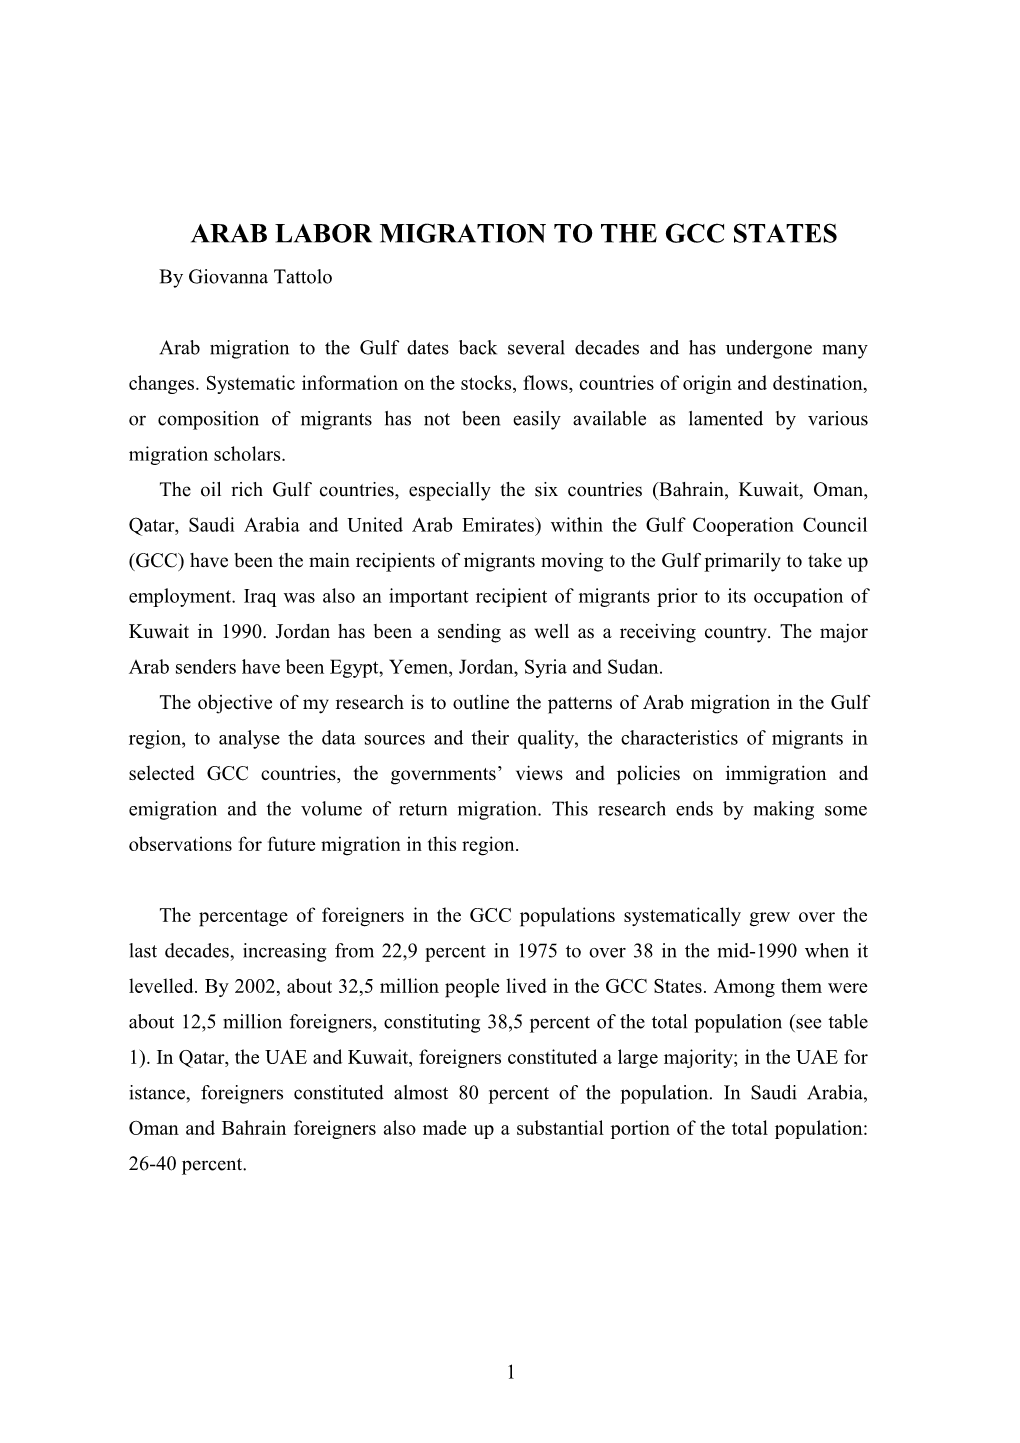 Arab Labor Migration to the GCC States